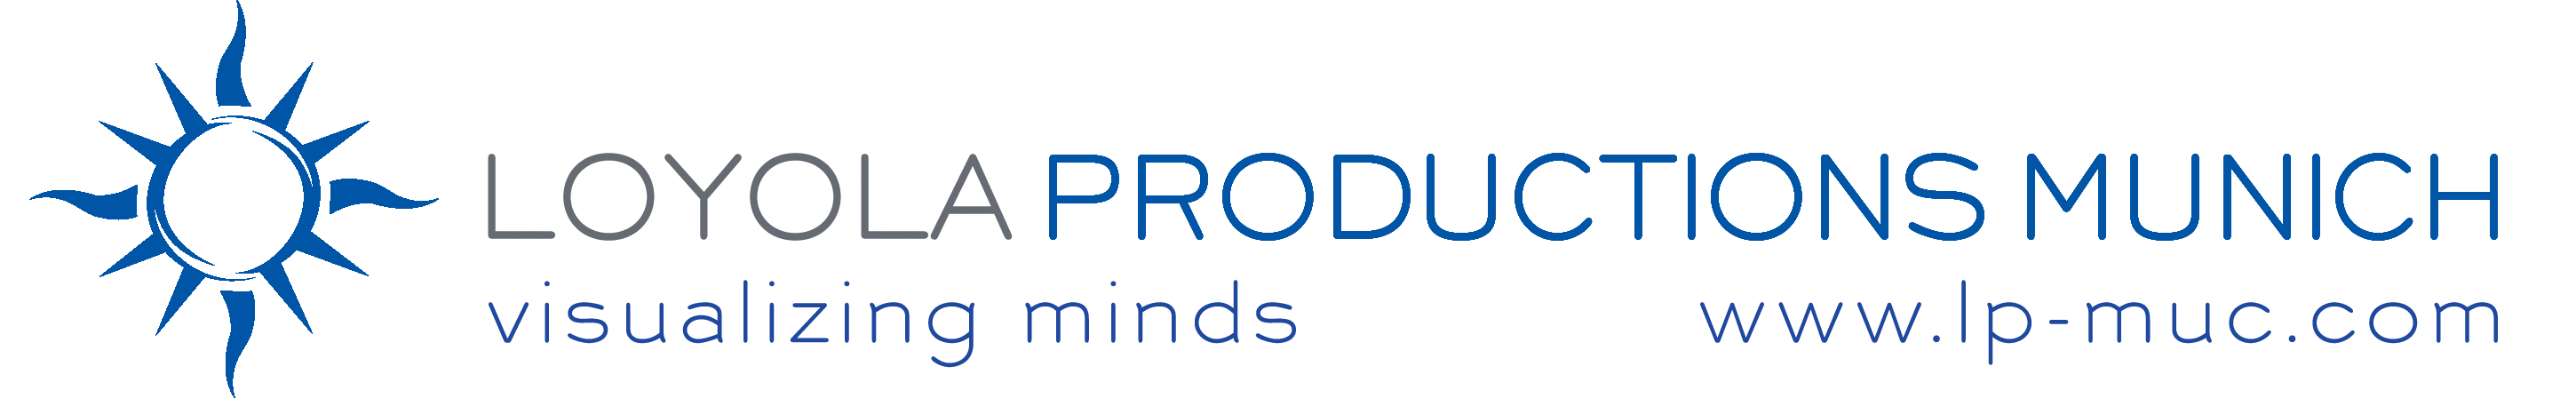 Loyola Productions Logo